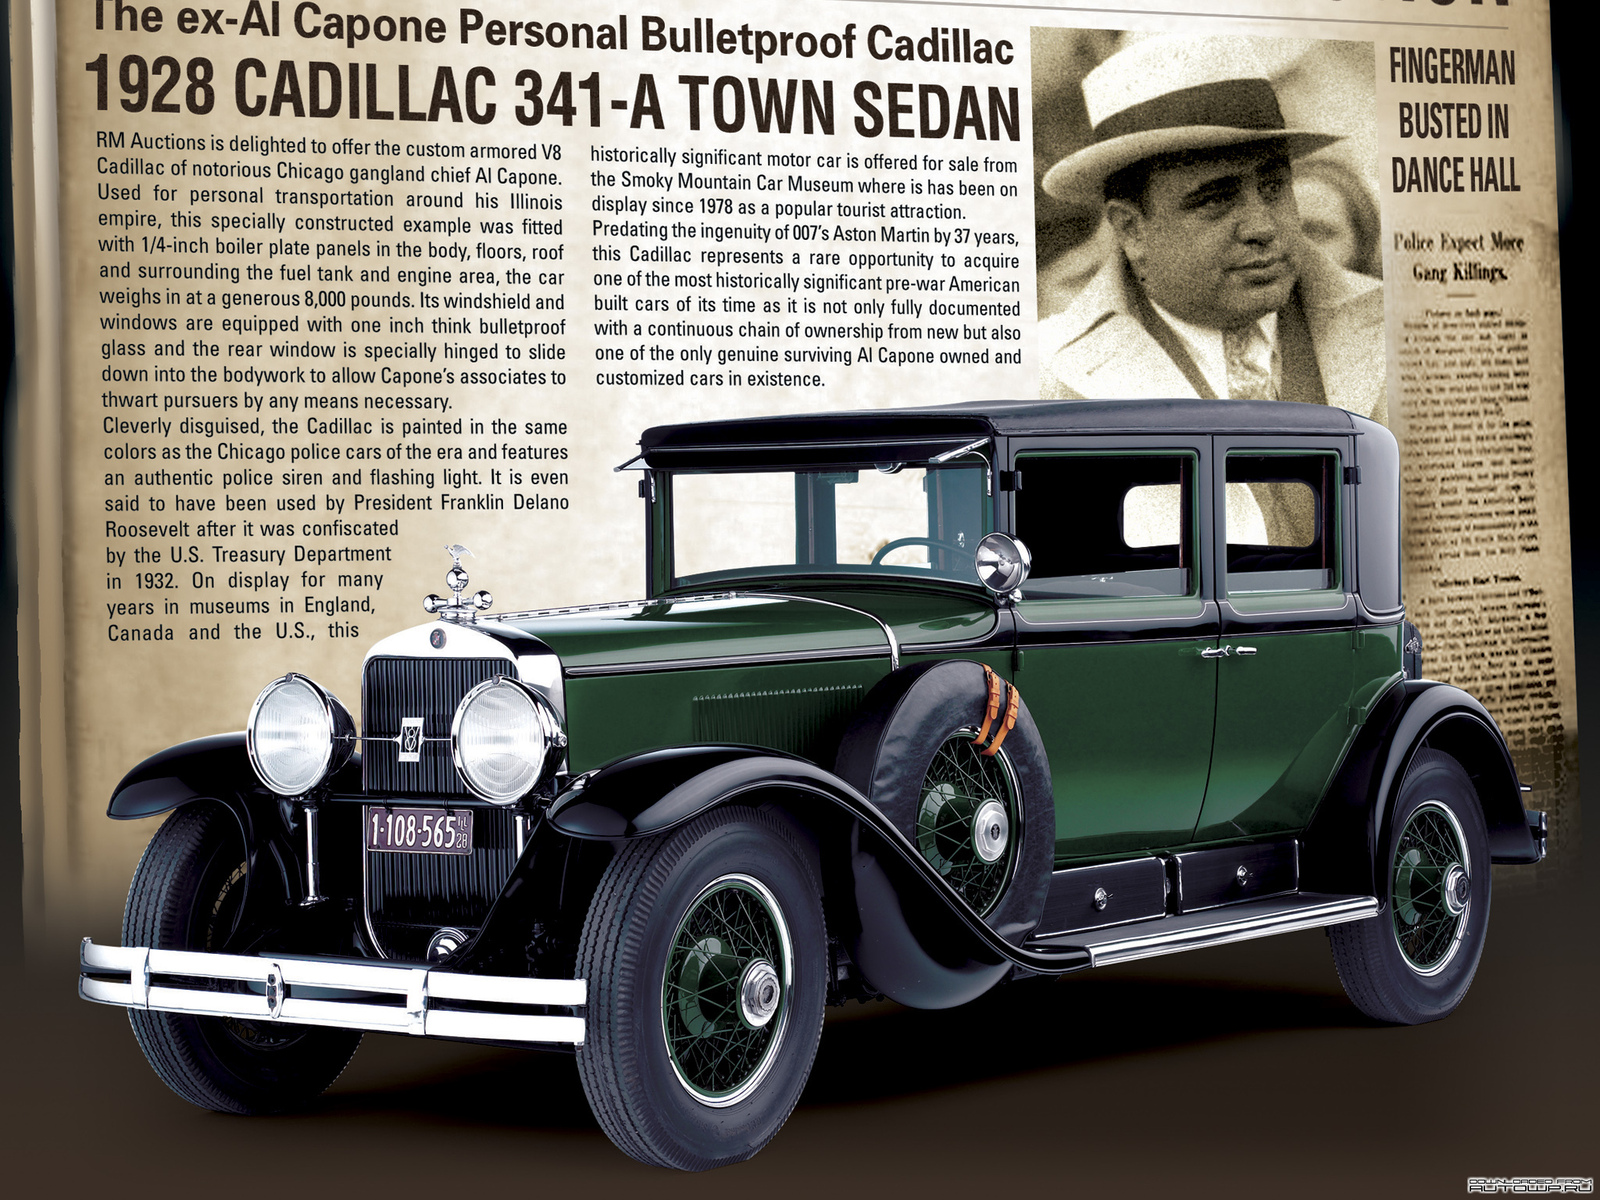 cadillac-v8-341-town-sedan-armored-1928.jpg